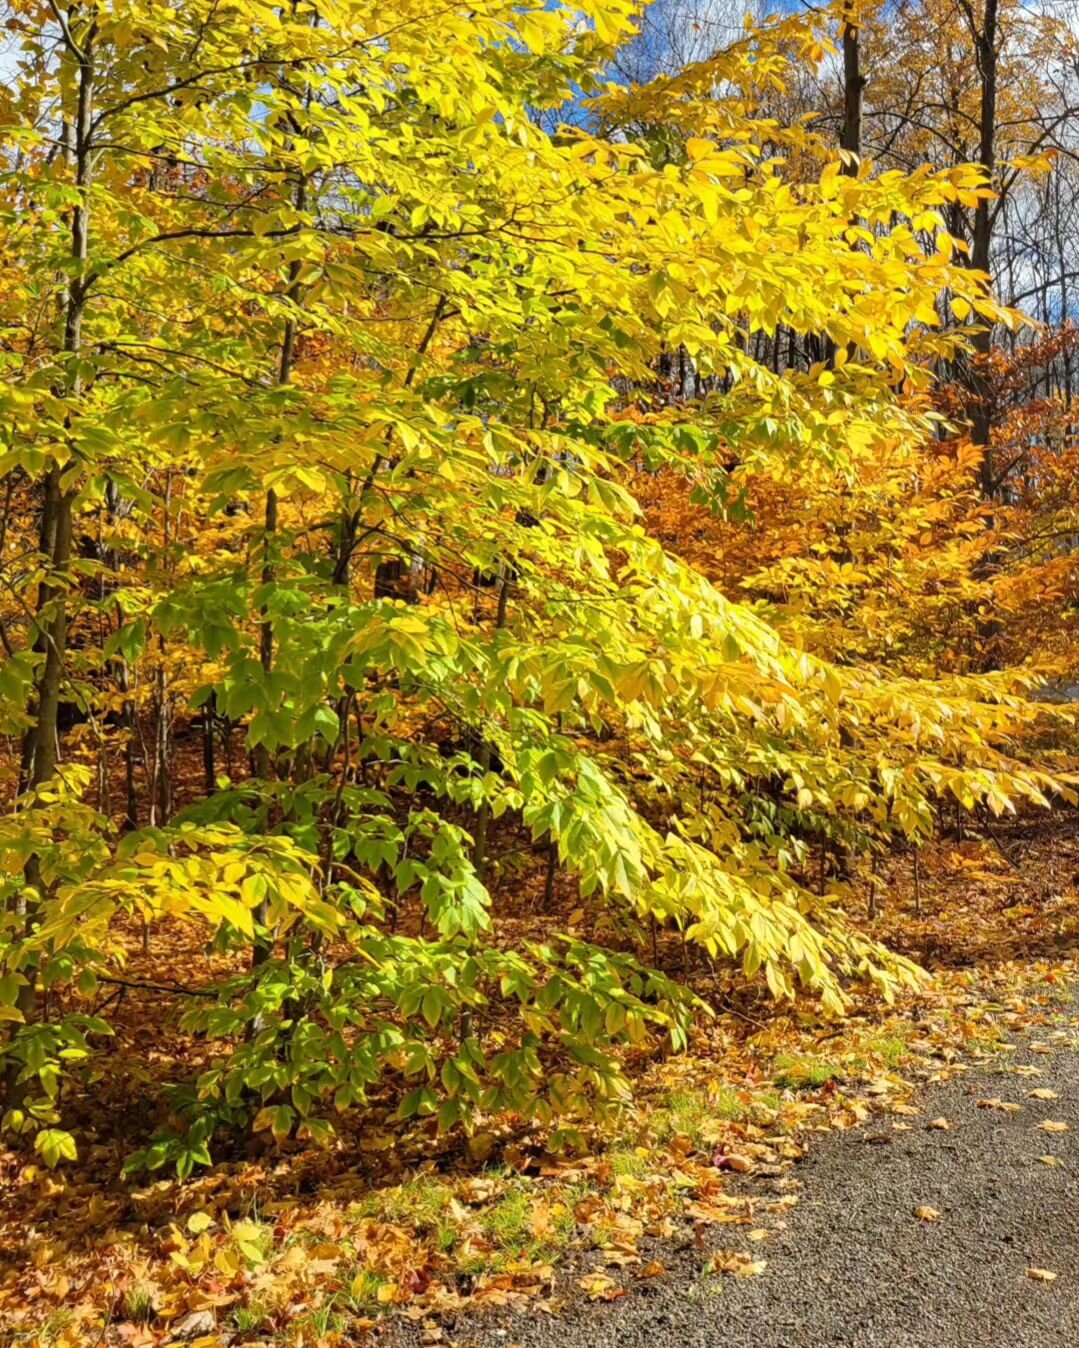 Cozy fall 🍂🍁

#fallvibes #golden #nature #autumn #fallleaves